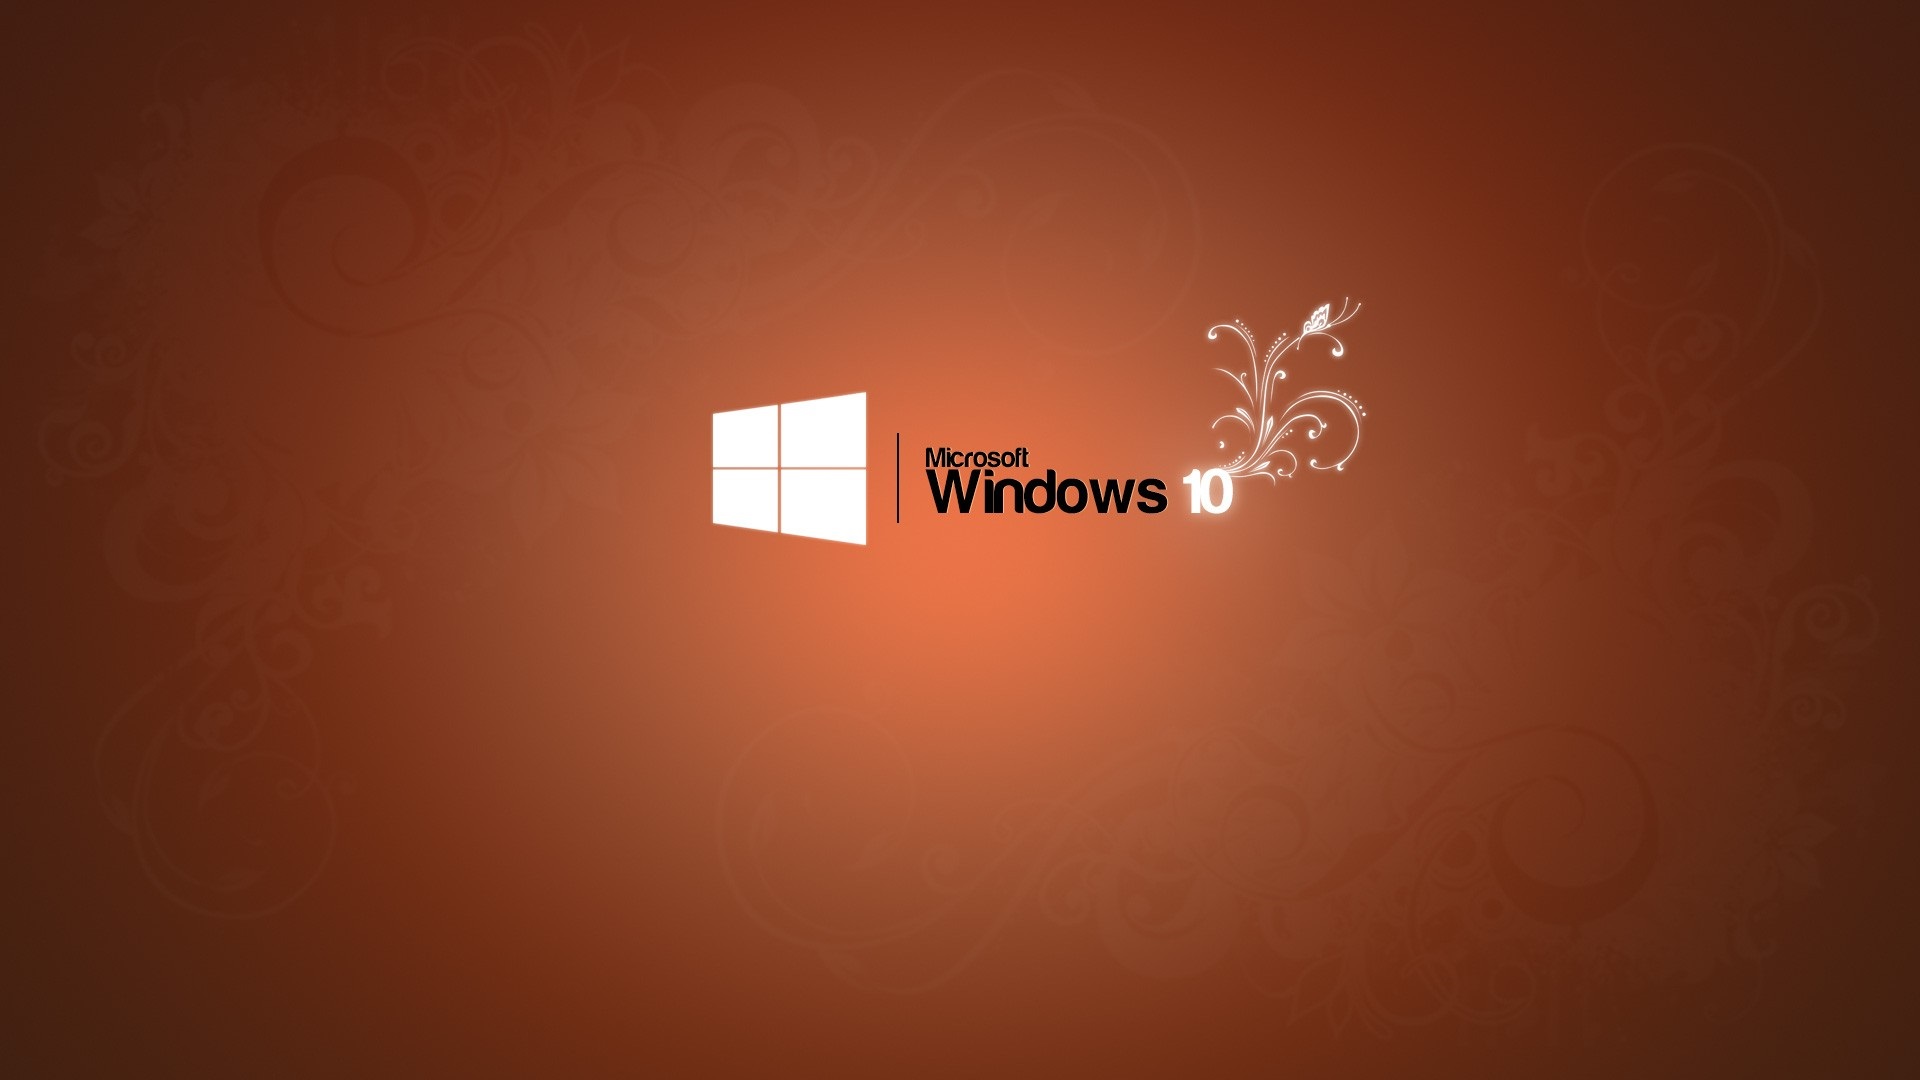 Microsoft-Windows-10-logo-orange-background_1920x1080.jpg